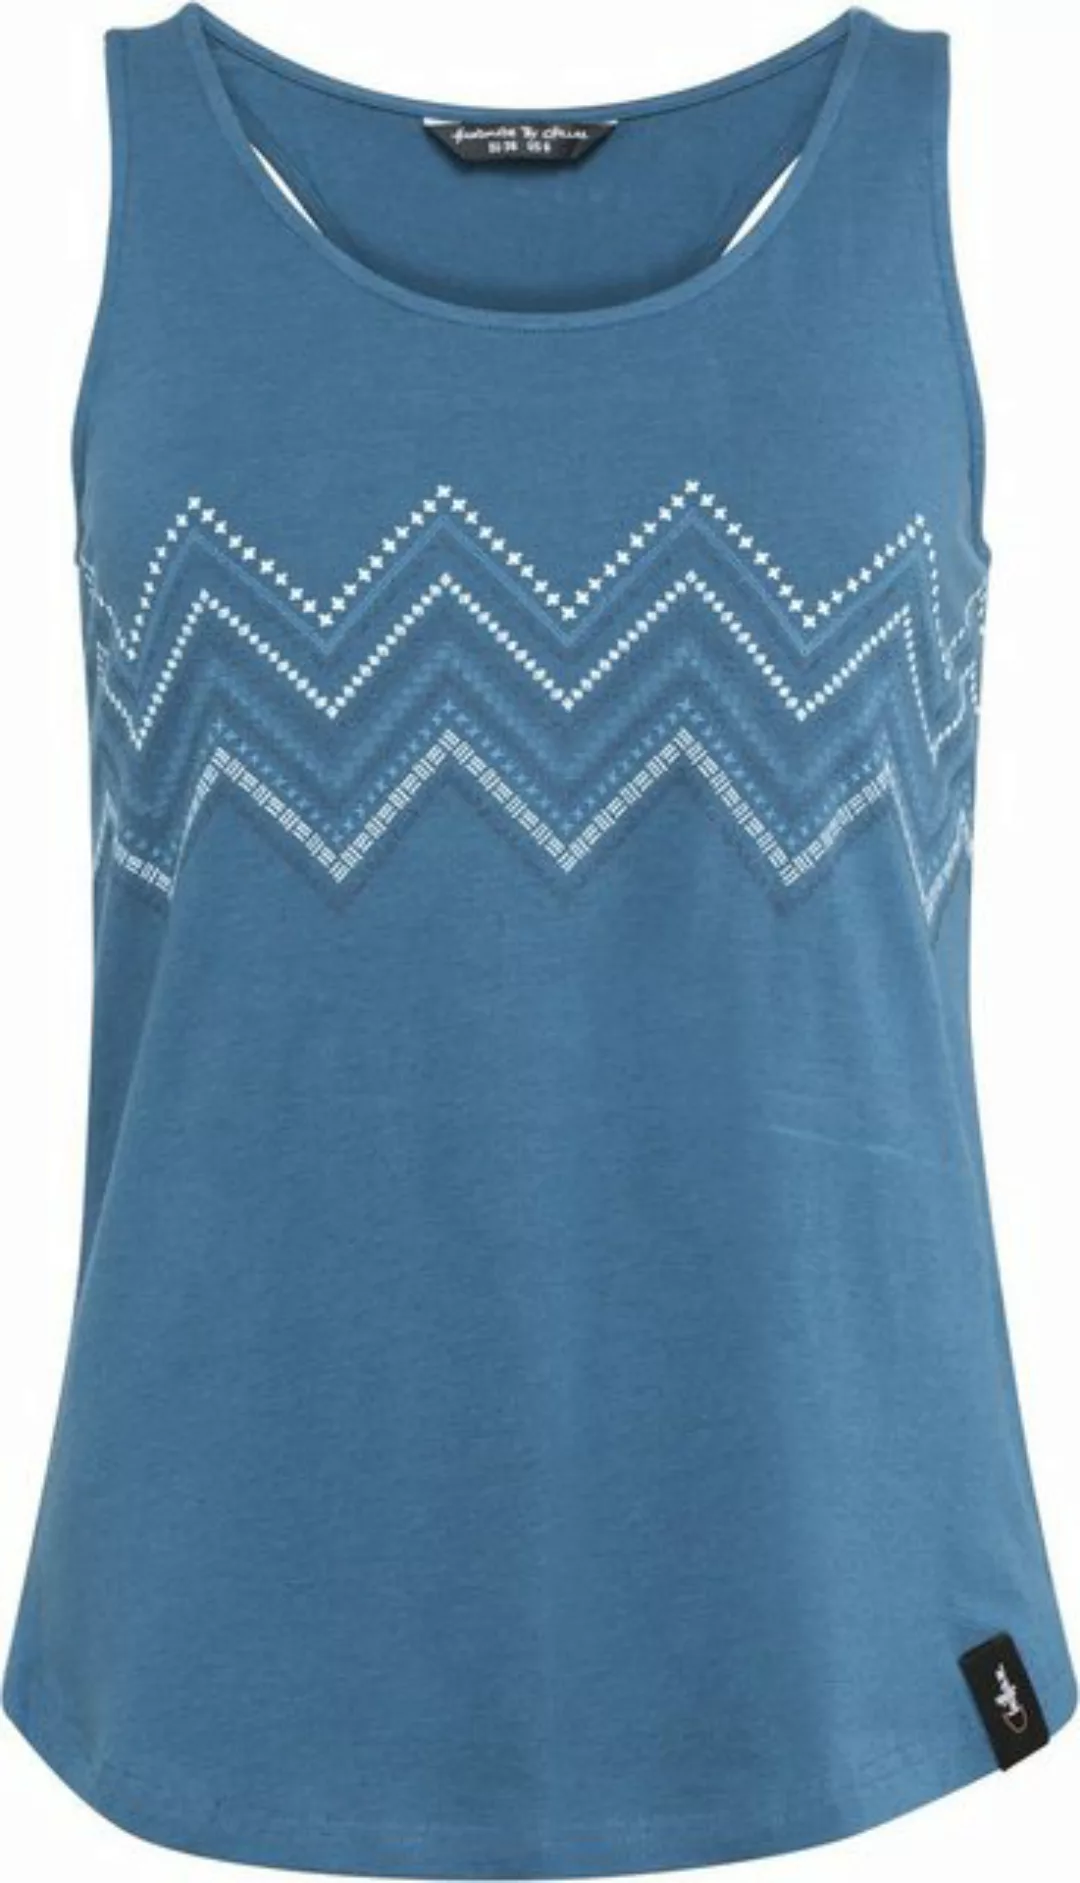 Chillaz T-Shirt Kauai Zigzag Ornament Top Women günstig online kaufen